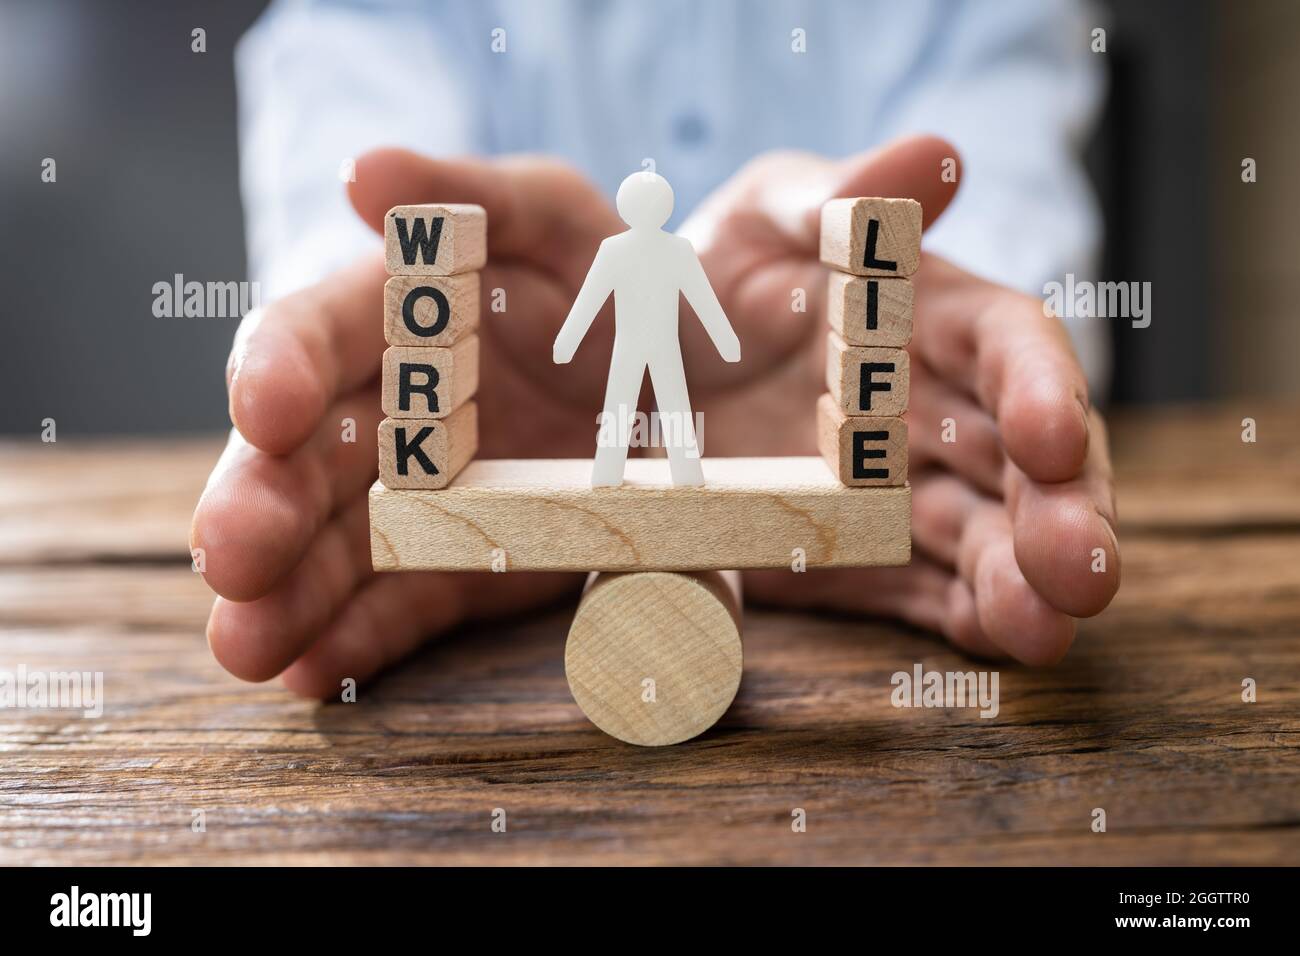 Work Life Balance Protection Concept. Lifestyle Choice Stock Photo